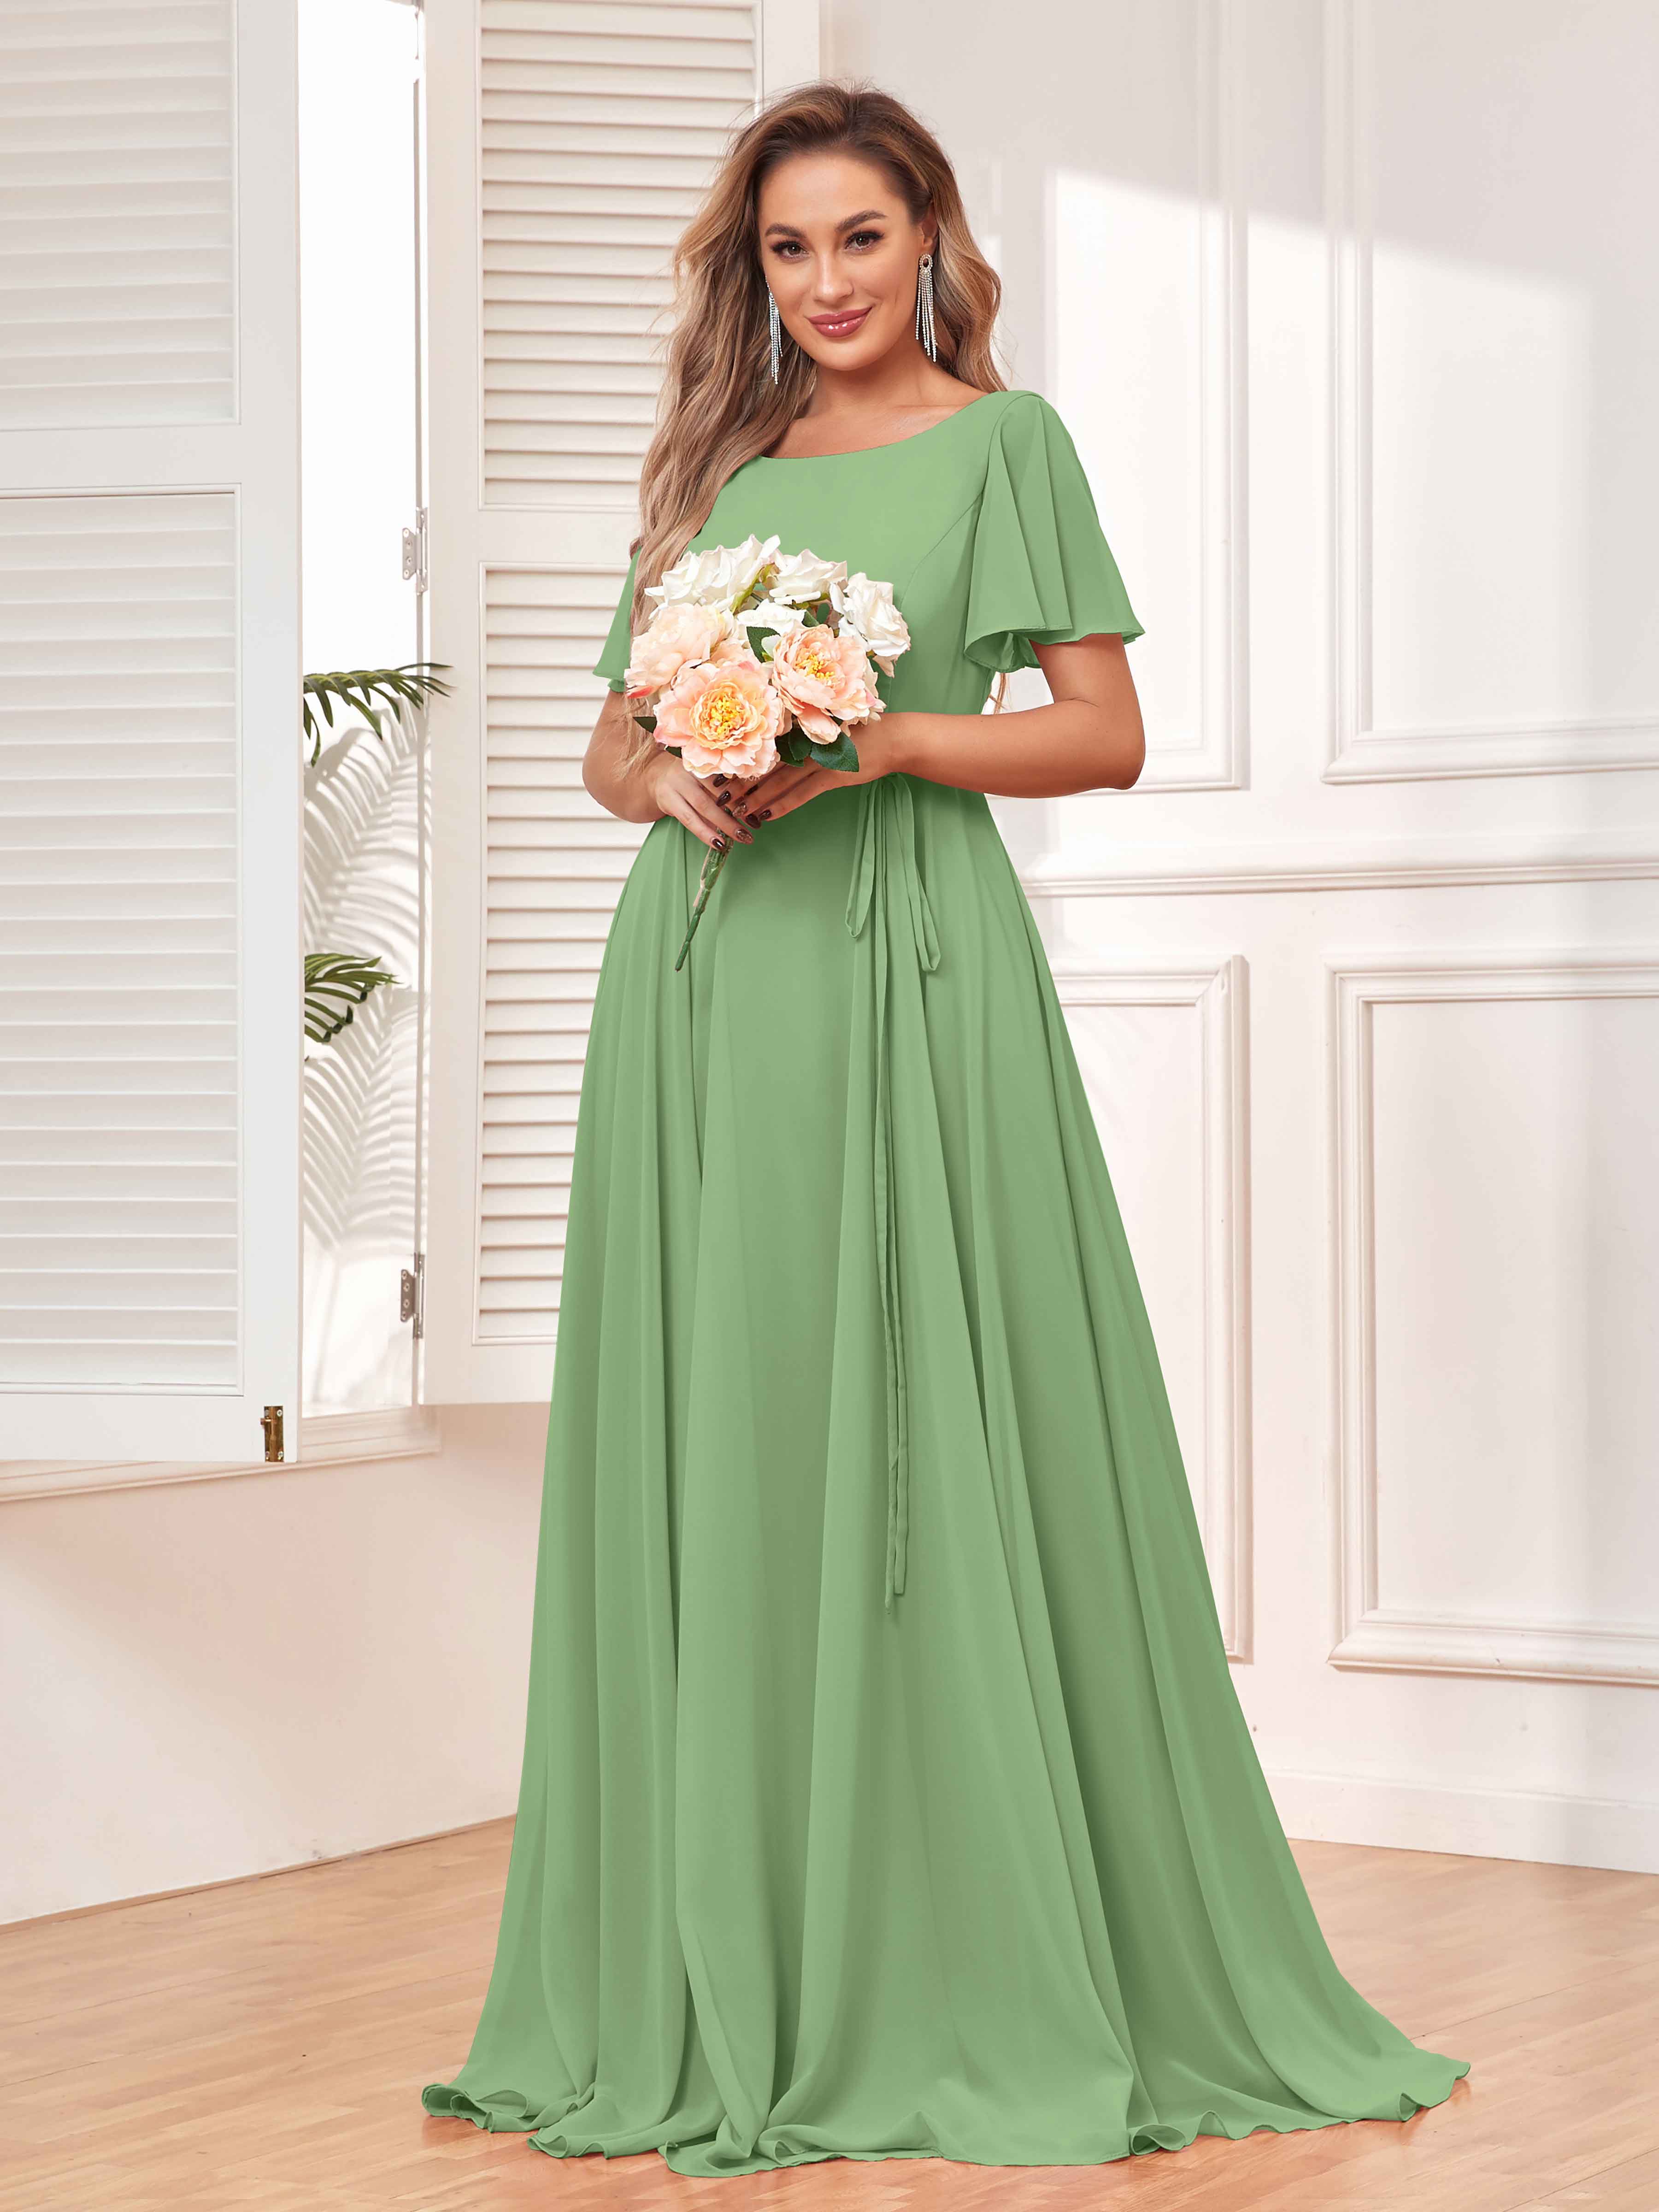 Greens Bridesmaid Dresses - Dusty Sage, Olive Green, Eucalyptus, Teal